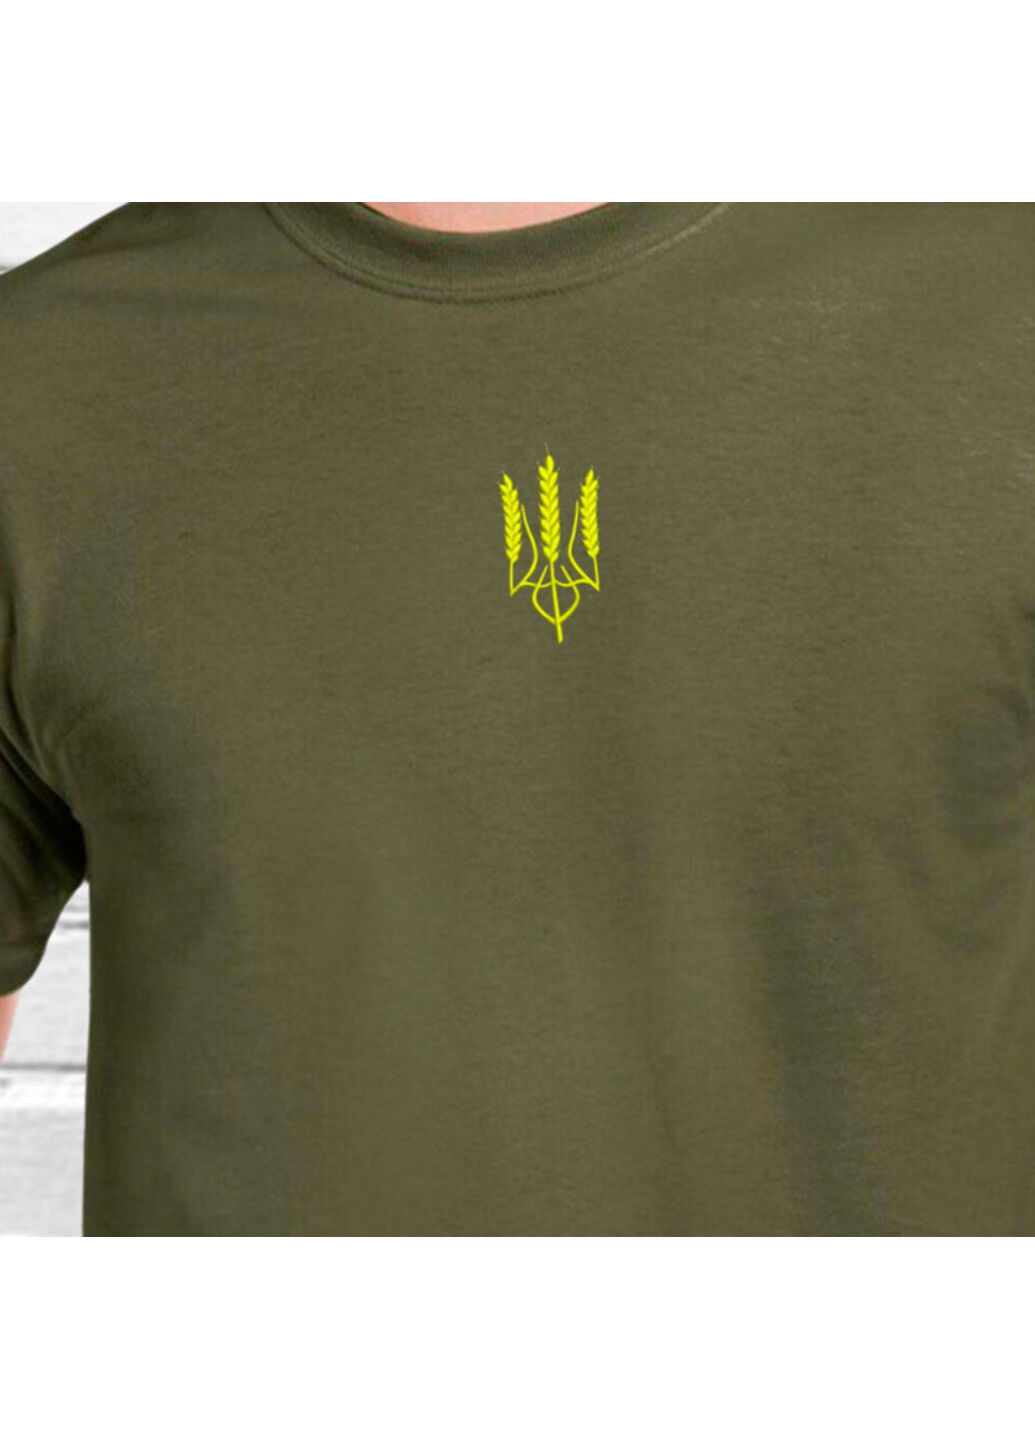 Хаки (оливковая) футболка з вишивкою тризуба 01-1 мужская хаки s No Brand